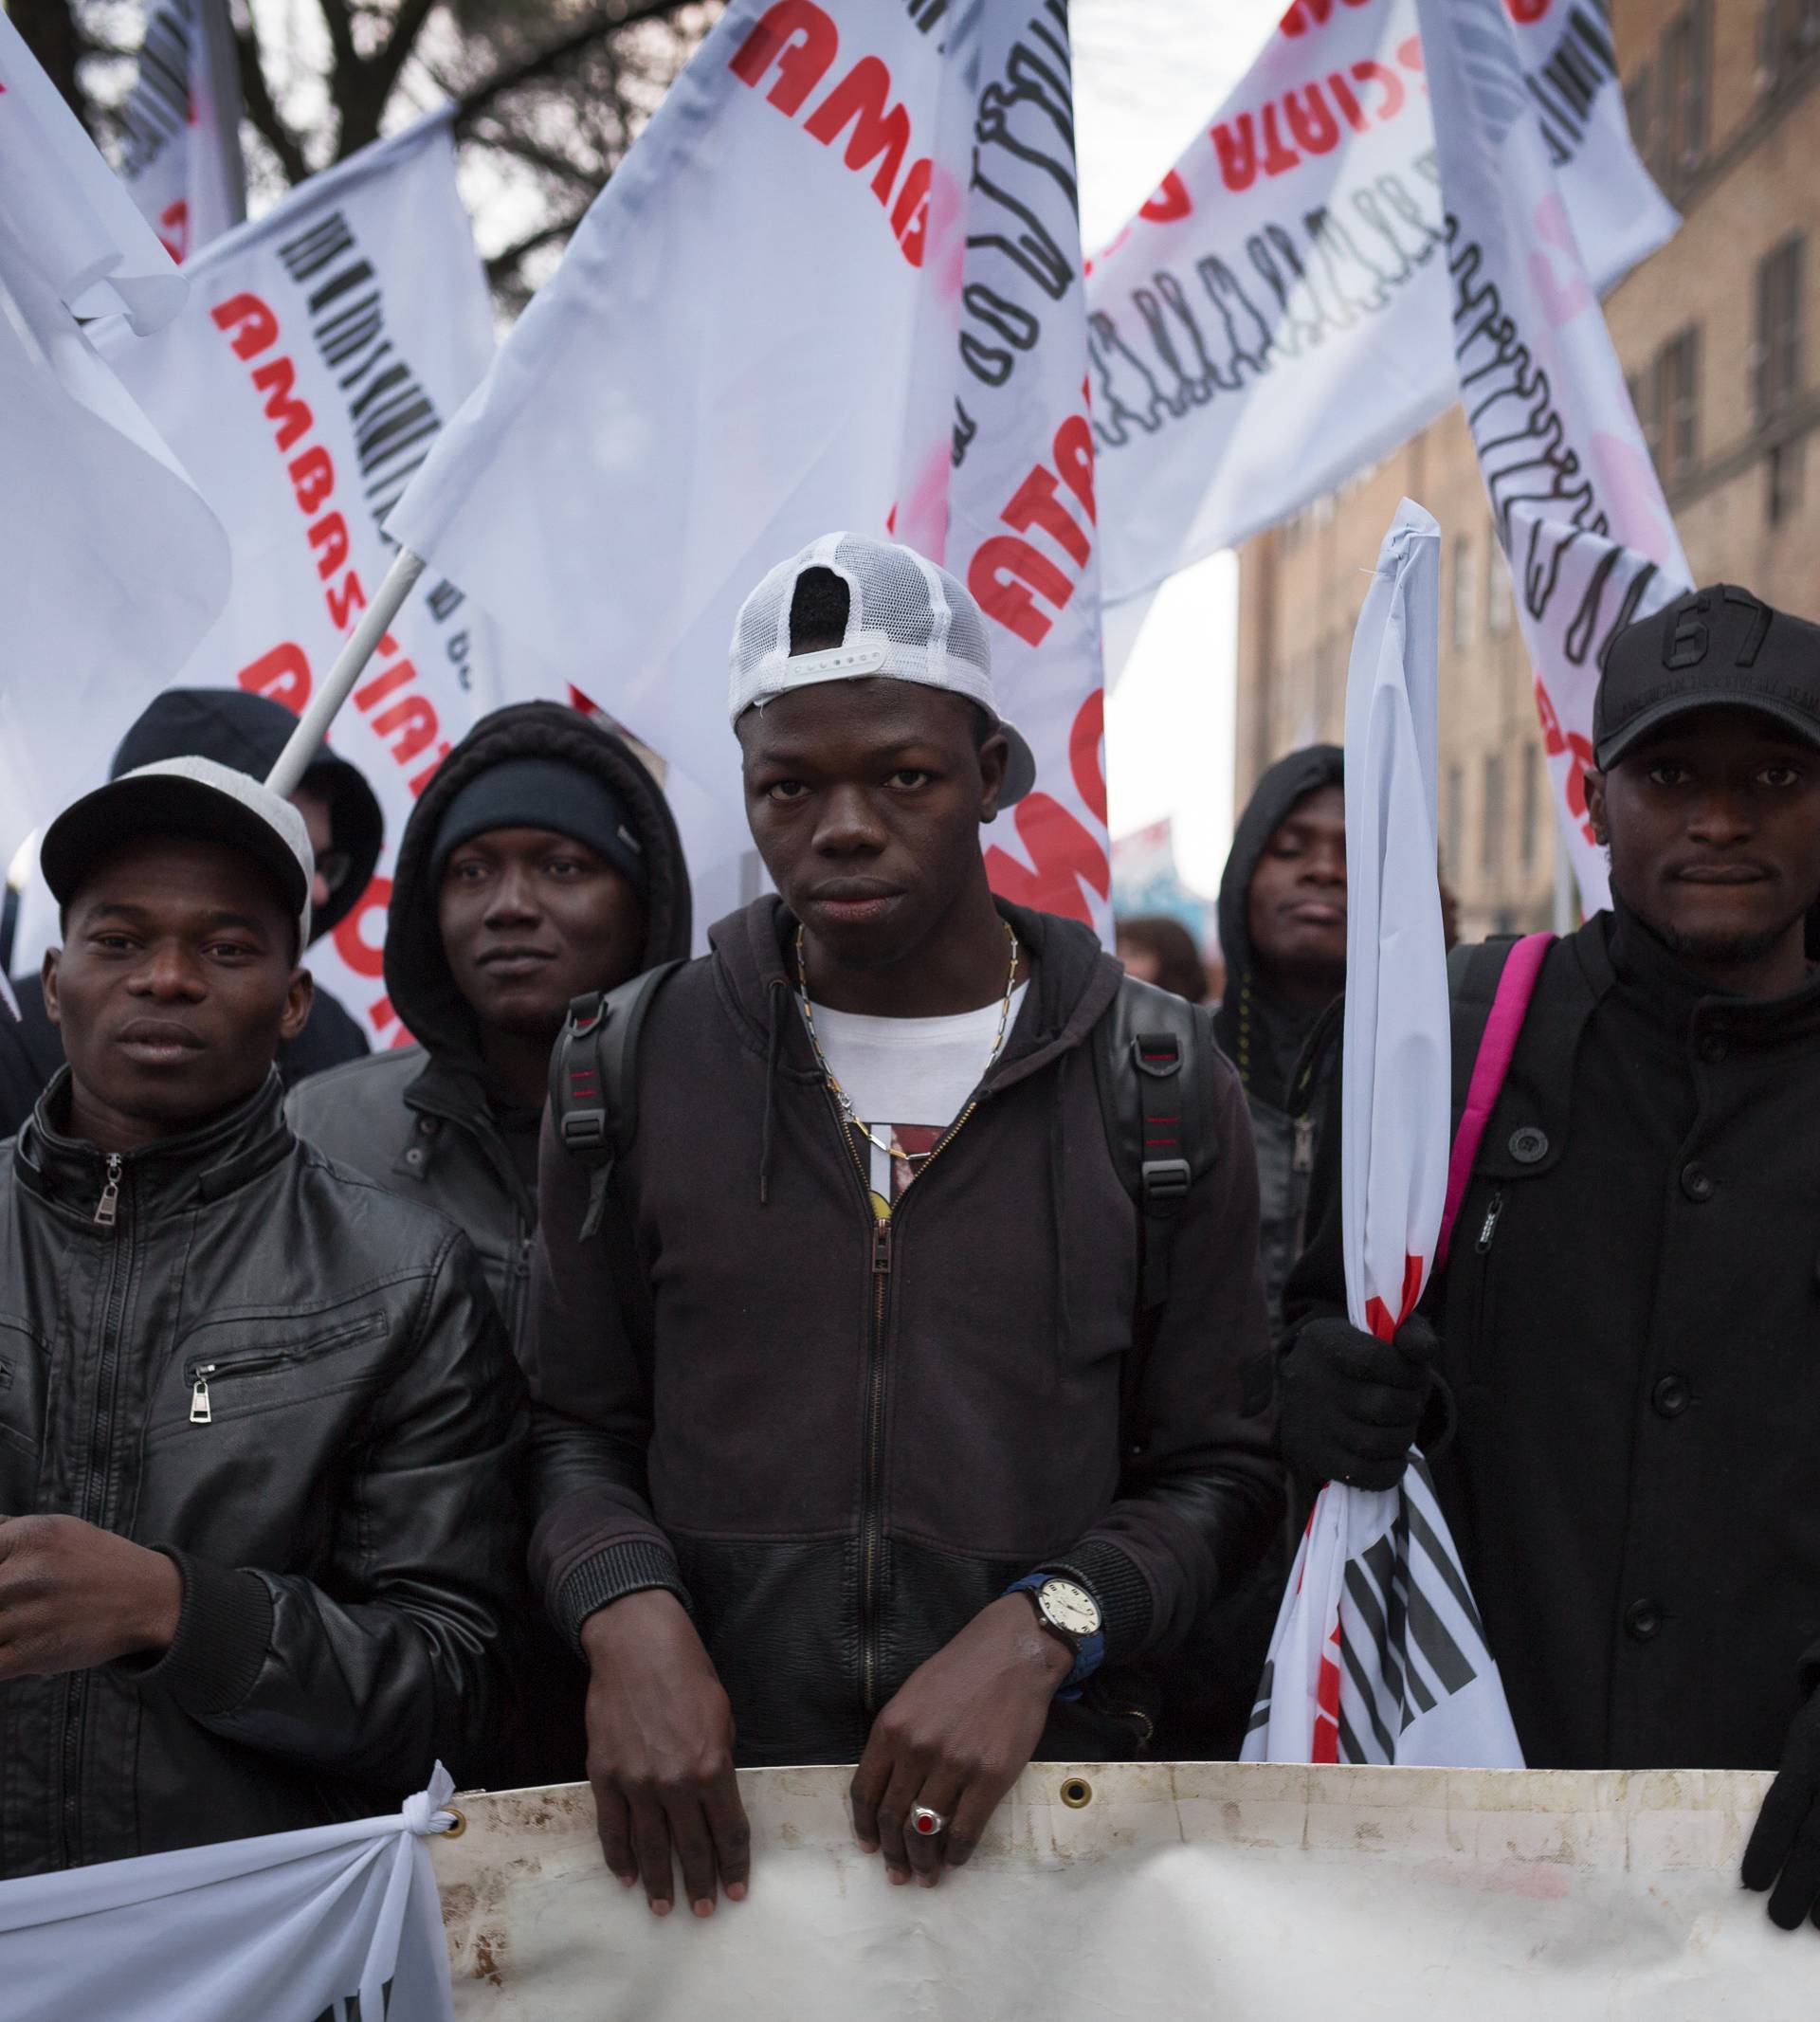 Macerata: Demonstration against fascism and racism